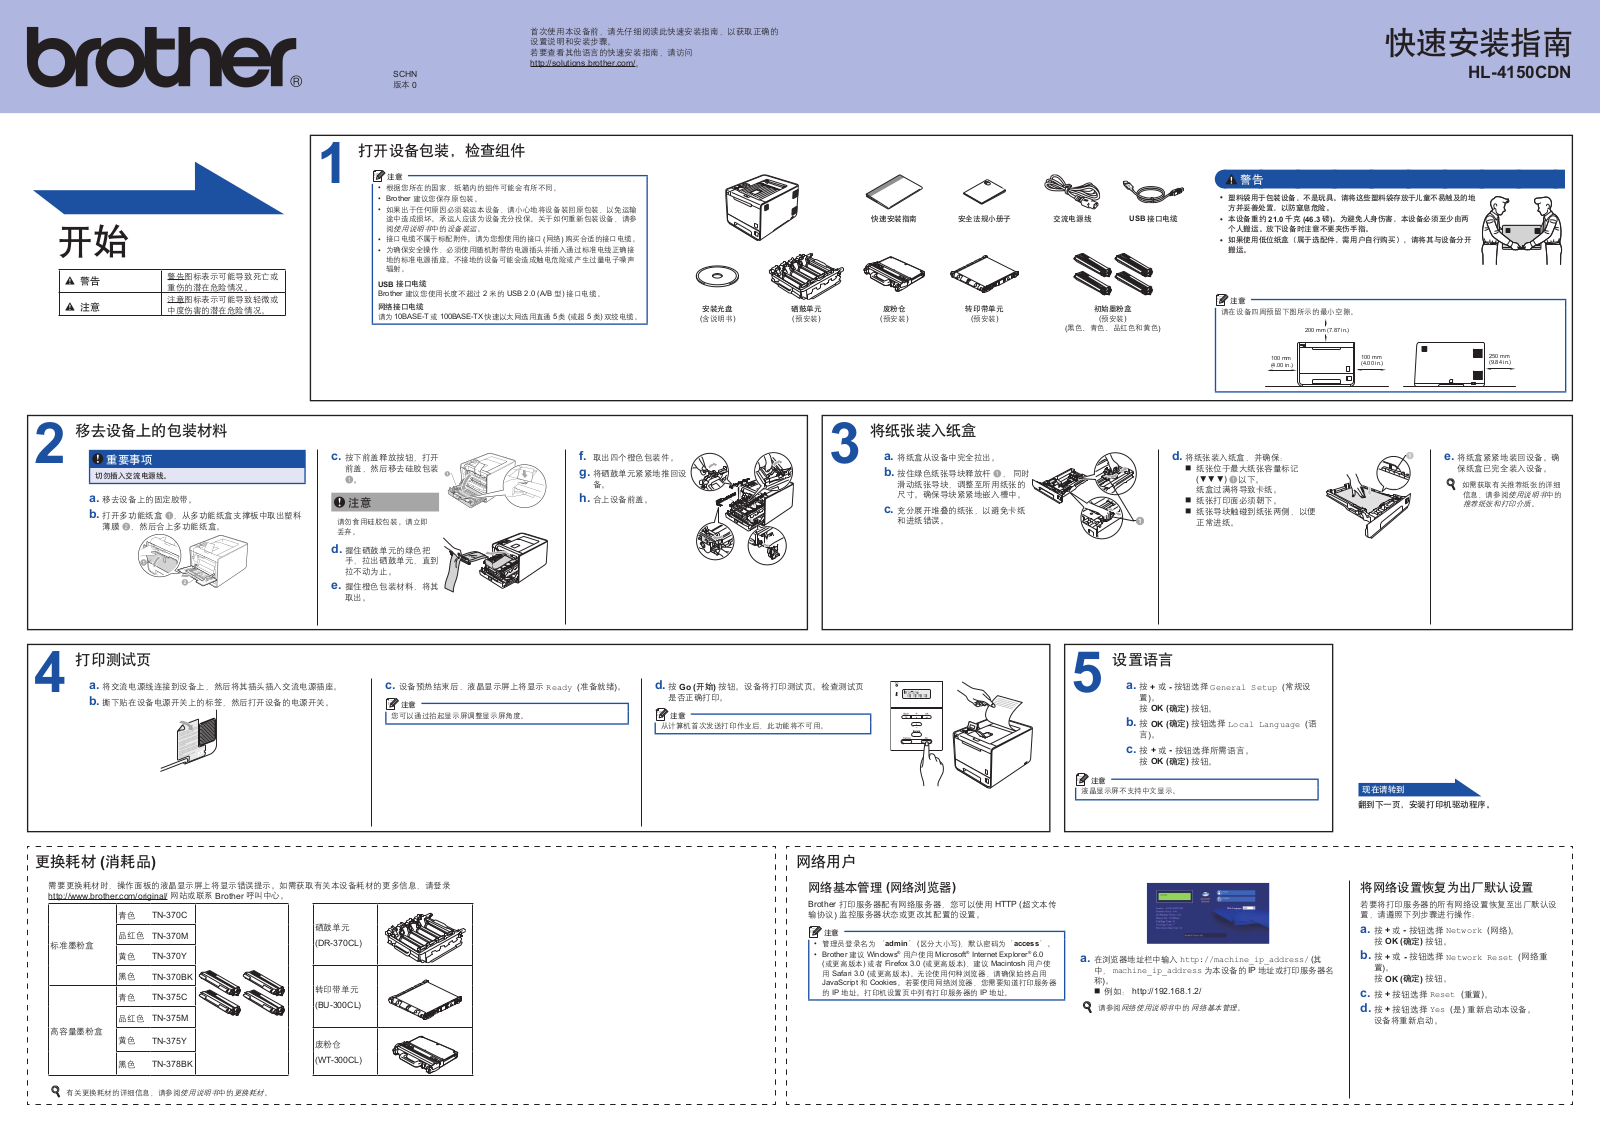 Brother HL-4150CDN User Manual